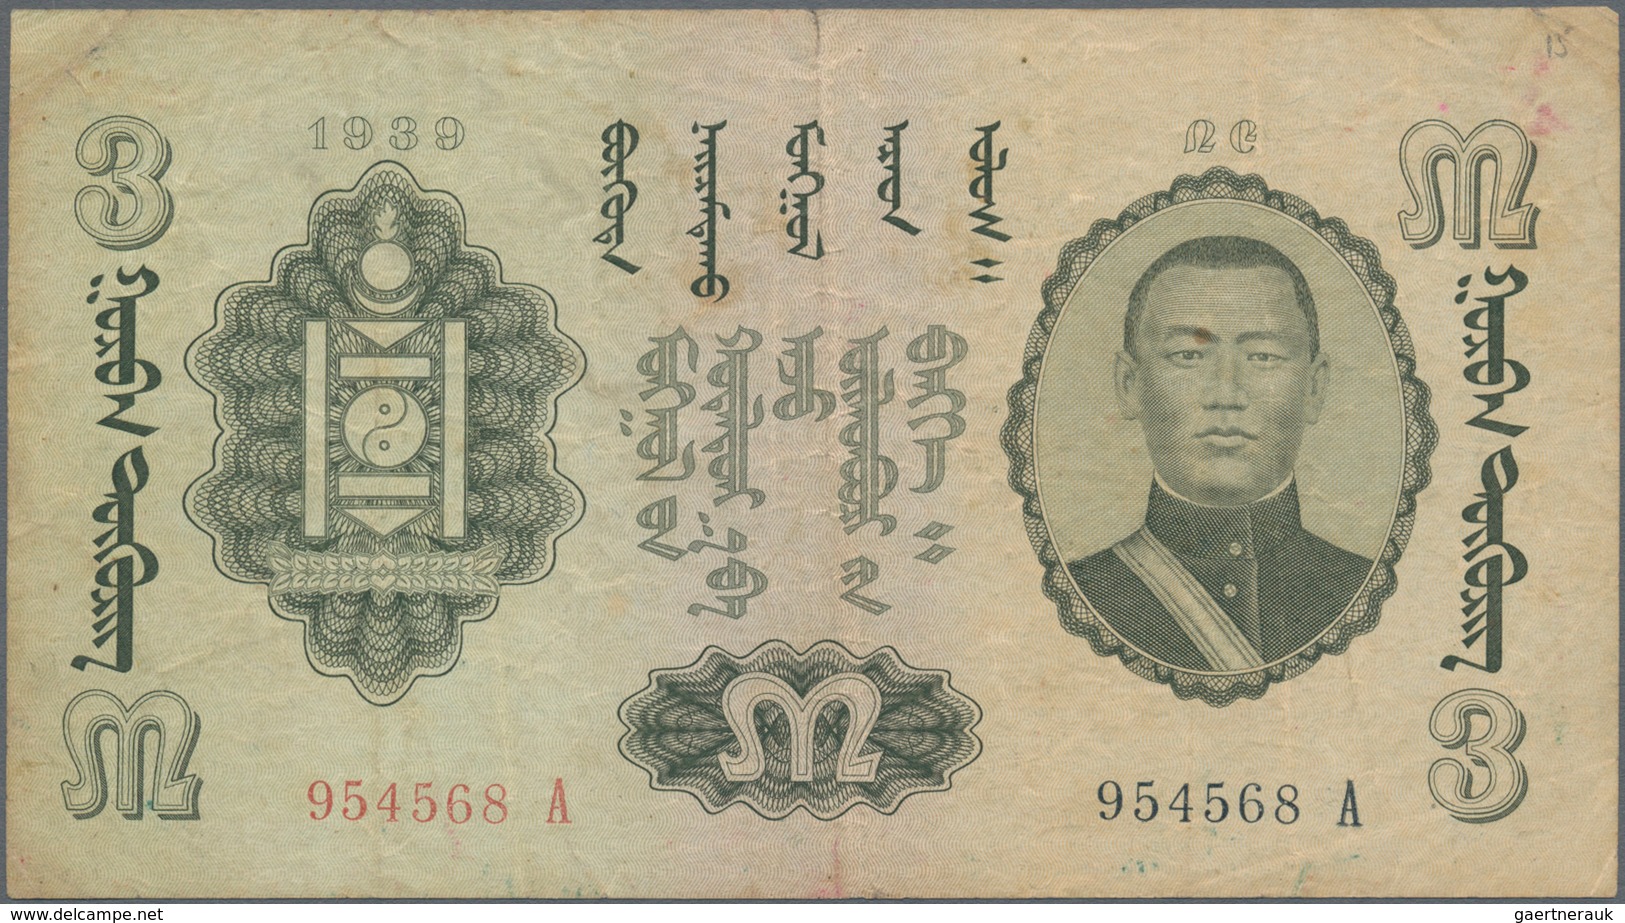 Mongolia / Mongolei: Pair With 1 Tugrik 1939 P.14 (F/F+) And 3 Tugrik 1939 P.15 (F). (2 Pcs.) Rare! - Mongolia